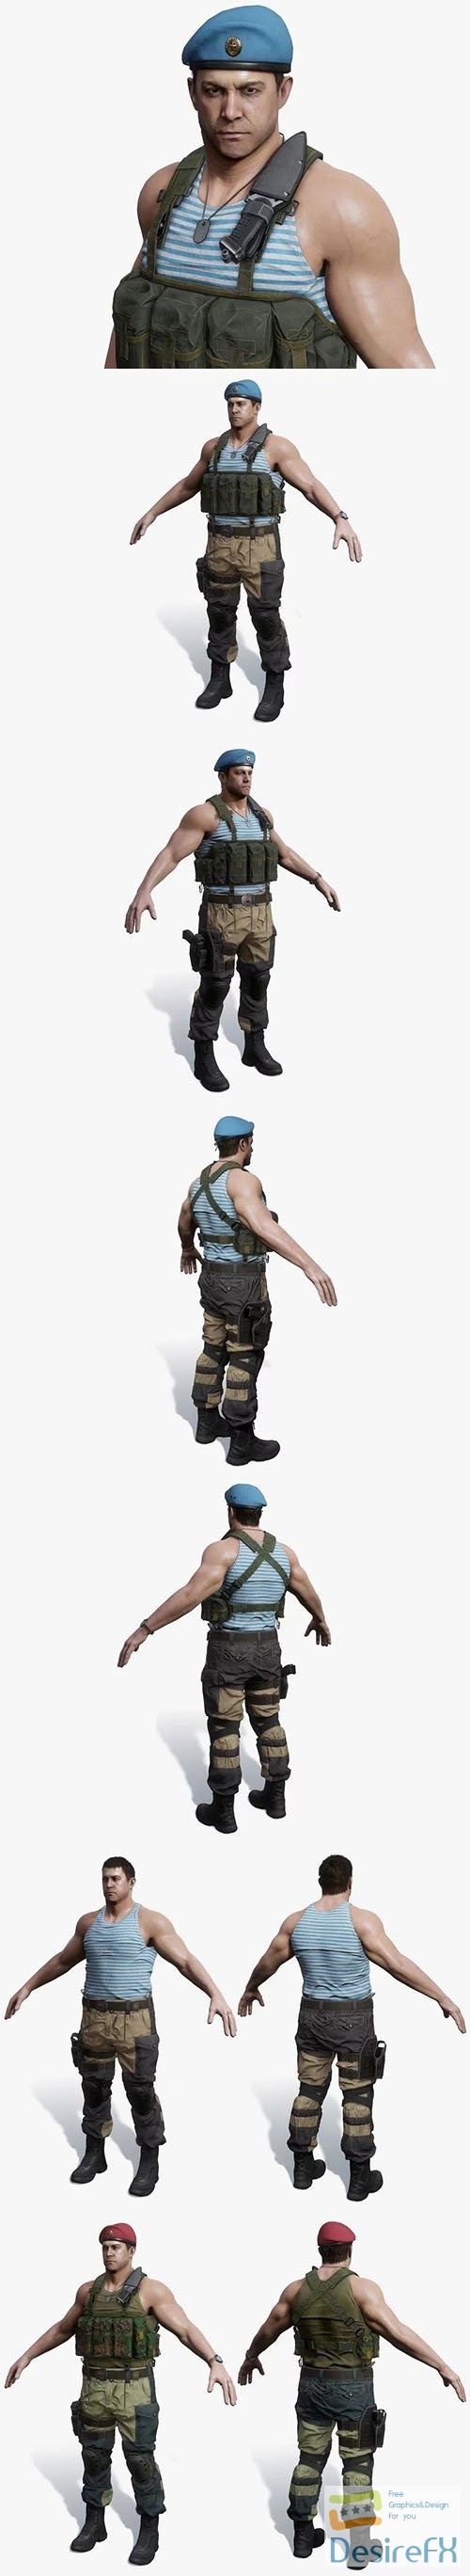 Army man paratrooper